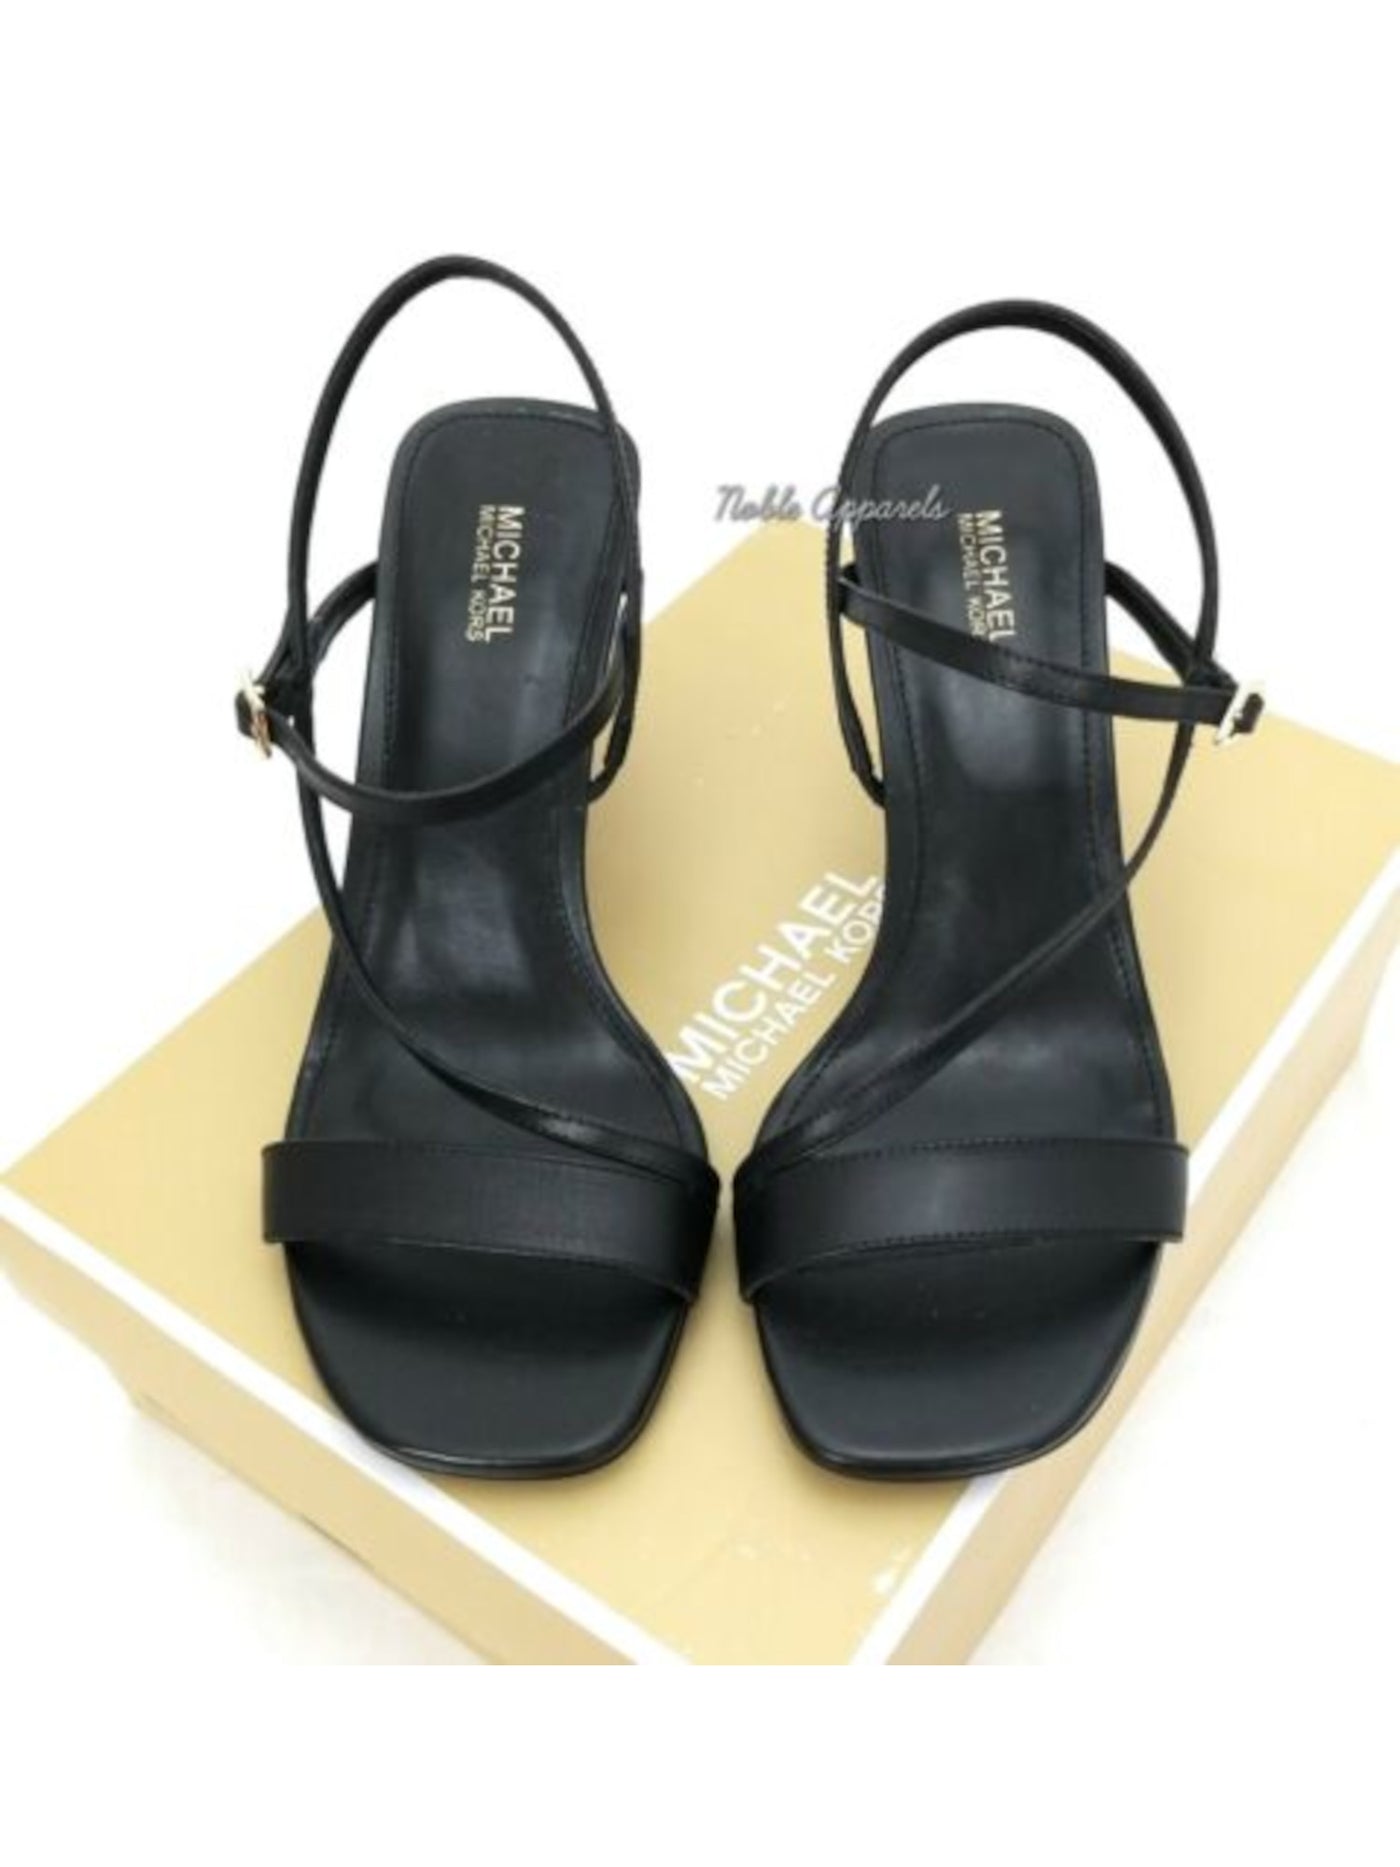 MICHAEL KORS Womens Black Asymmetrical Padded Tasha Square Toe Stiletto Buckle Leather Dress Slingback Sandal 9 M